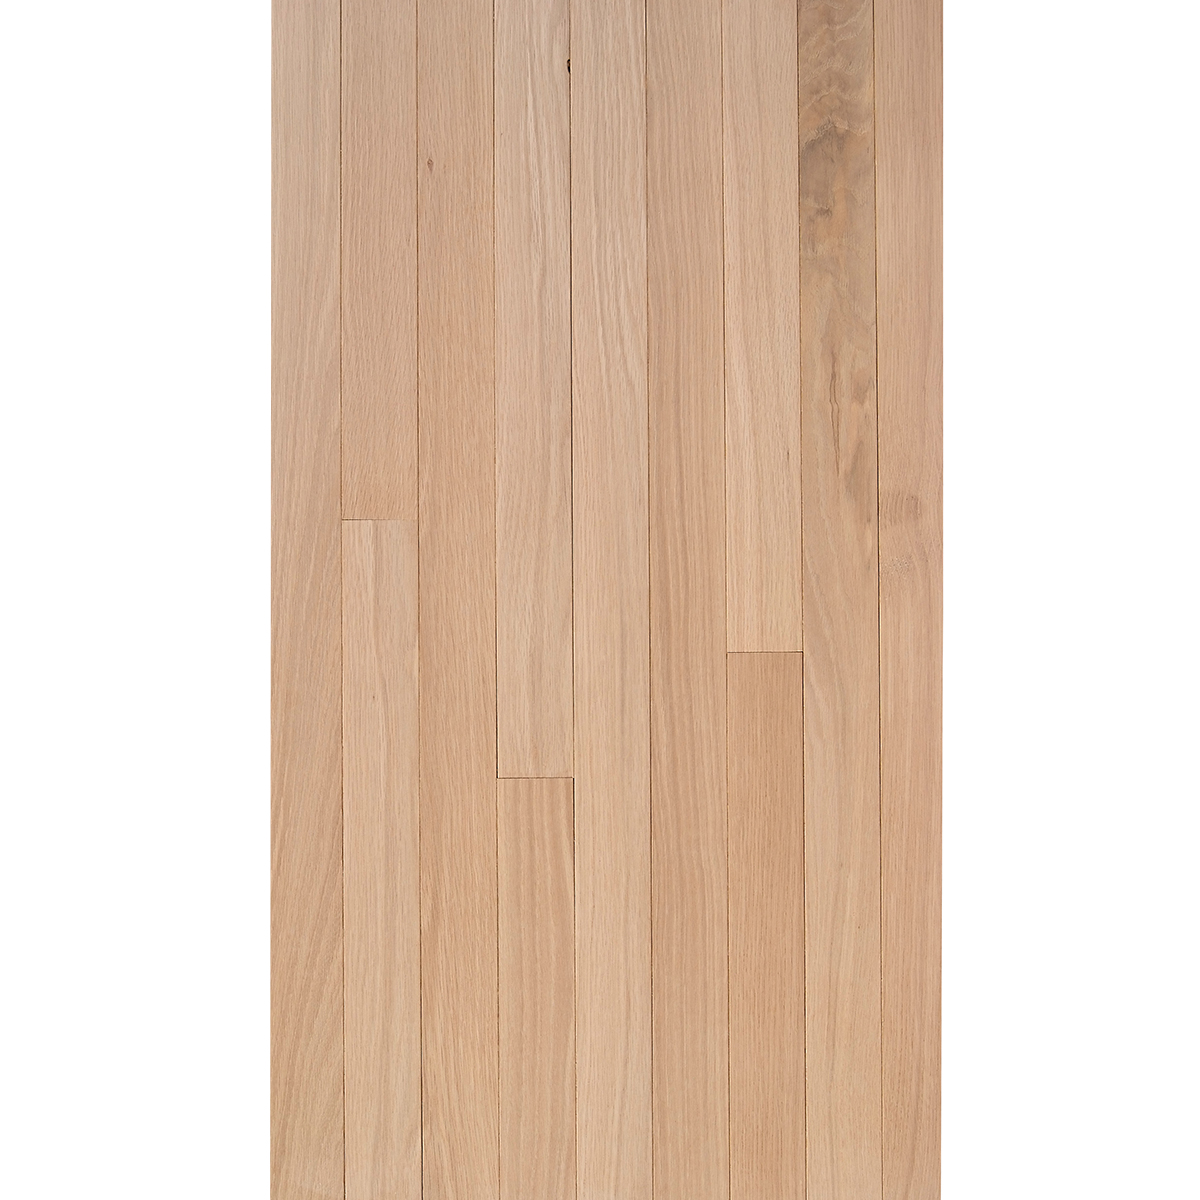 White Oak 3 4 X 2 1 Select Grade, 1 4 Inch Hardwood Flooring